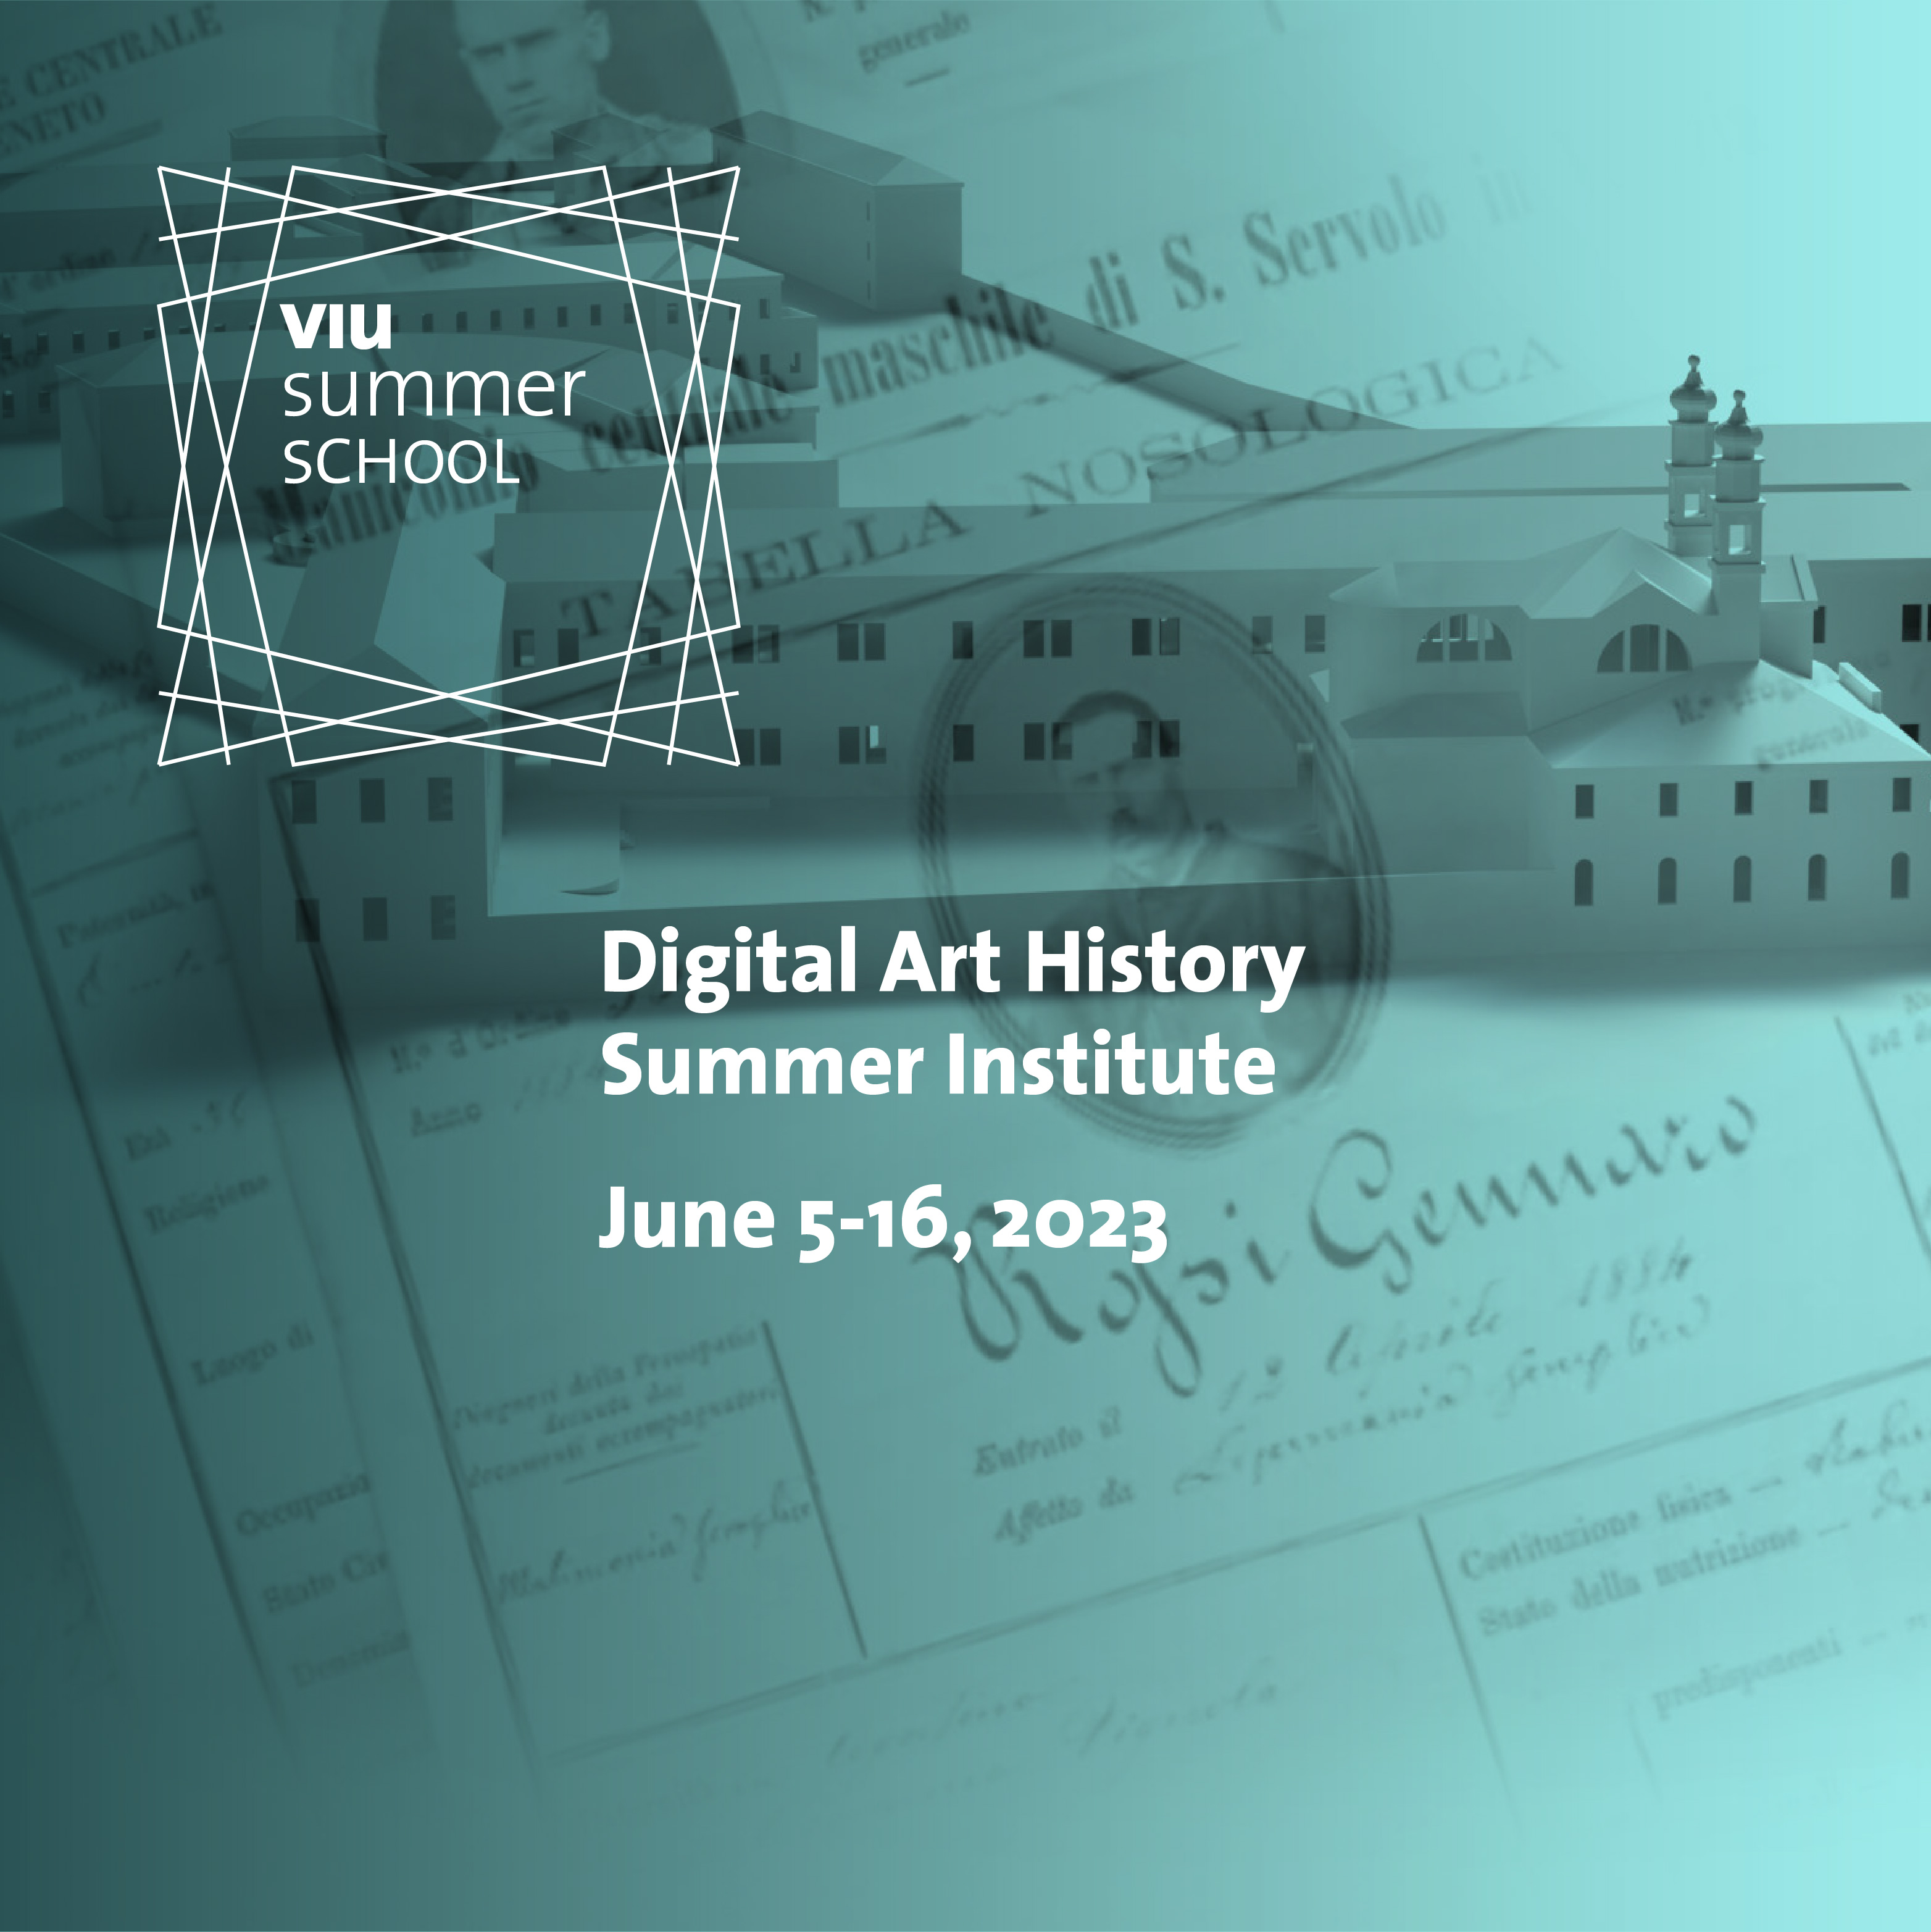 banner VIU Summer School Digital Art History Summer Institute 2023 def